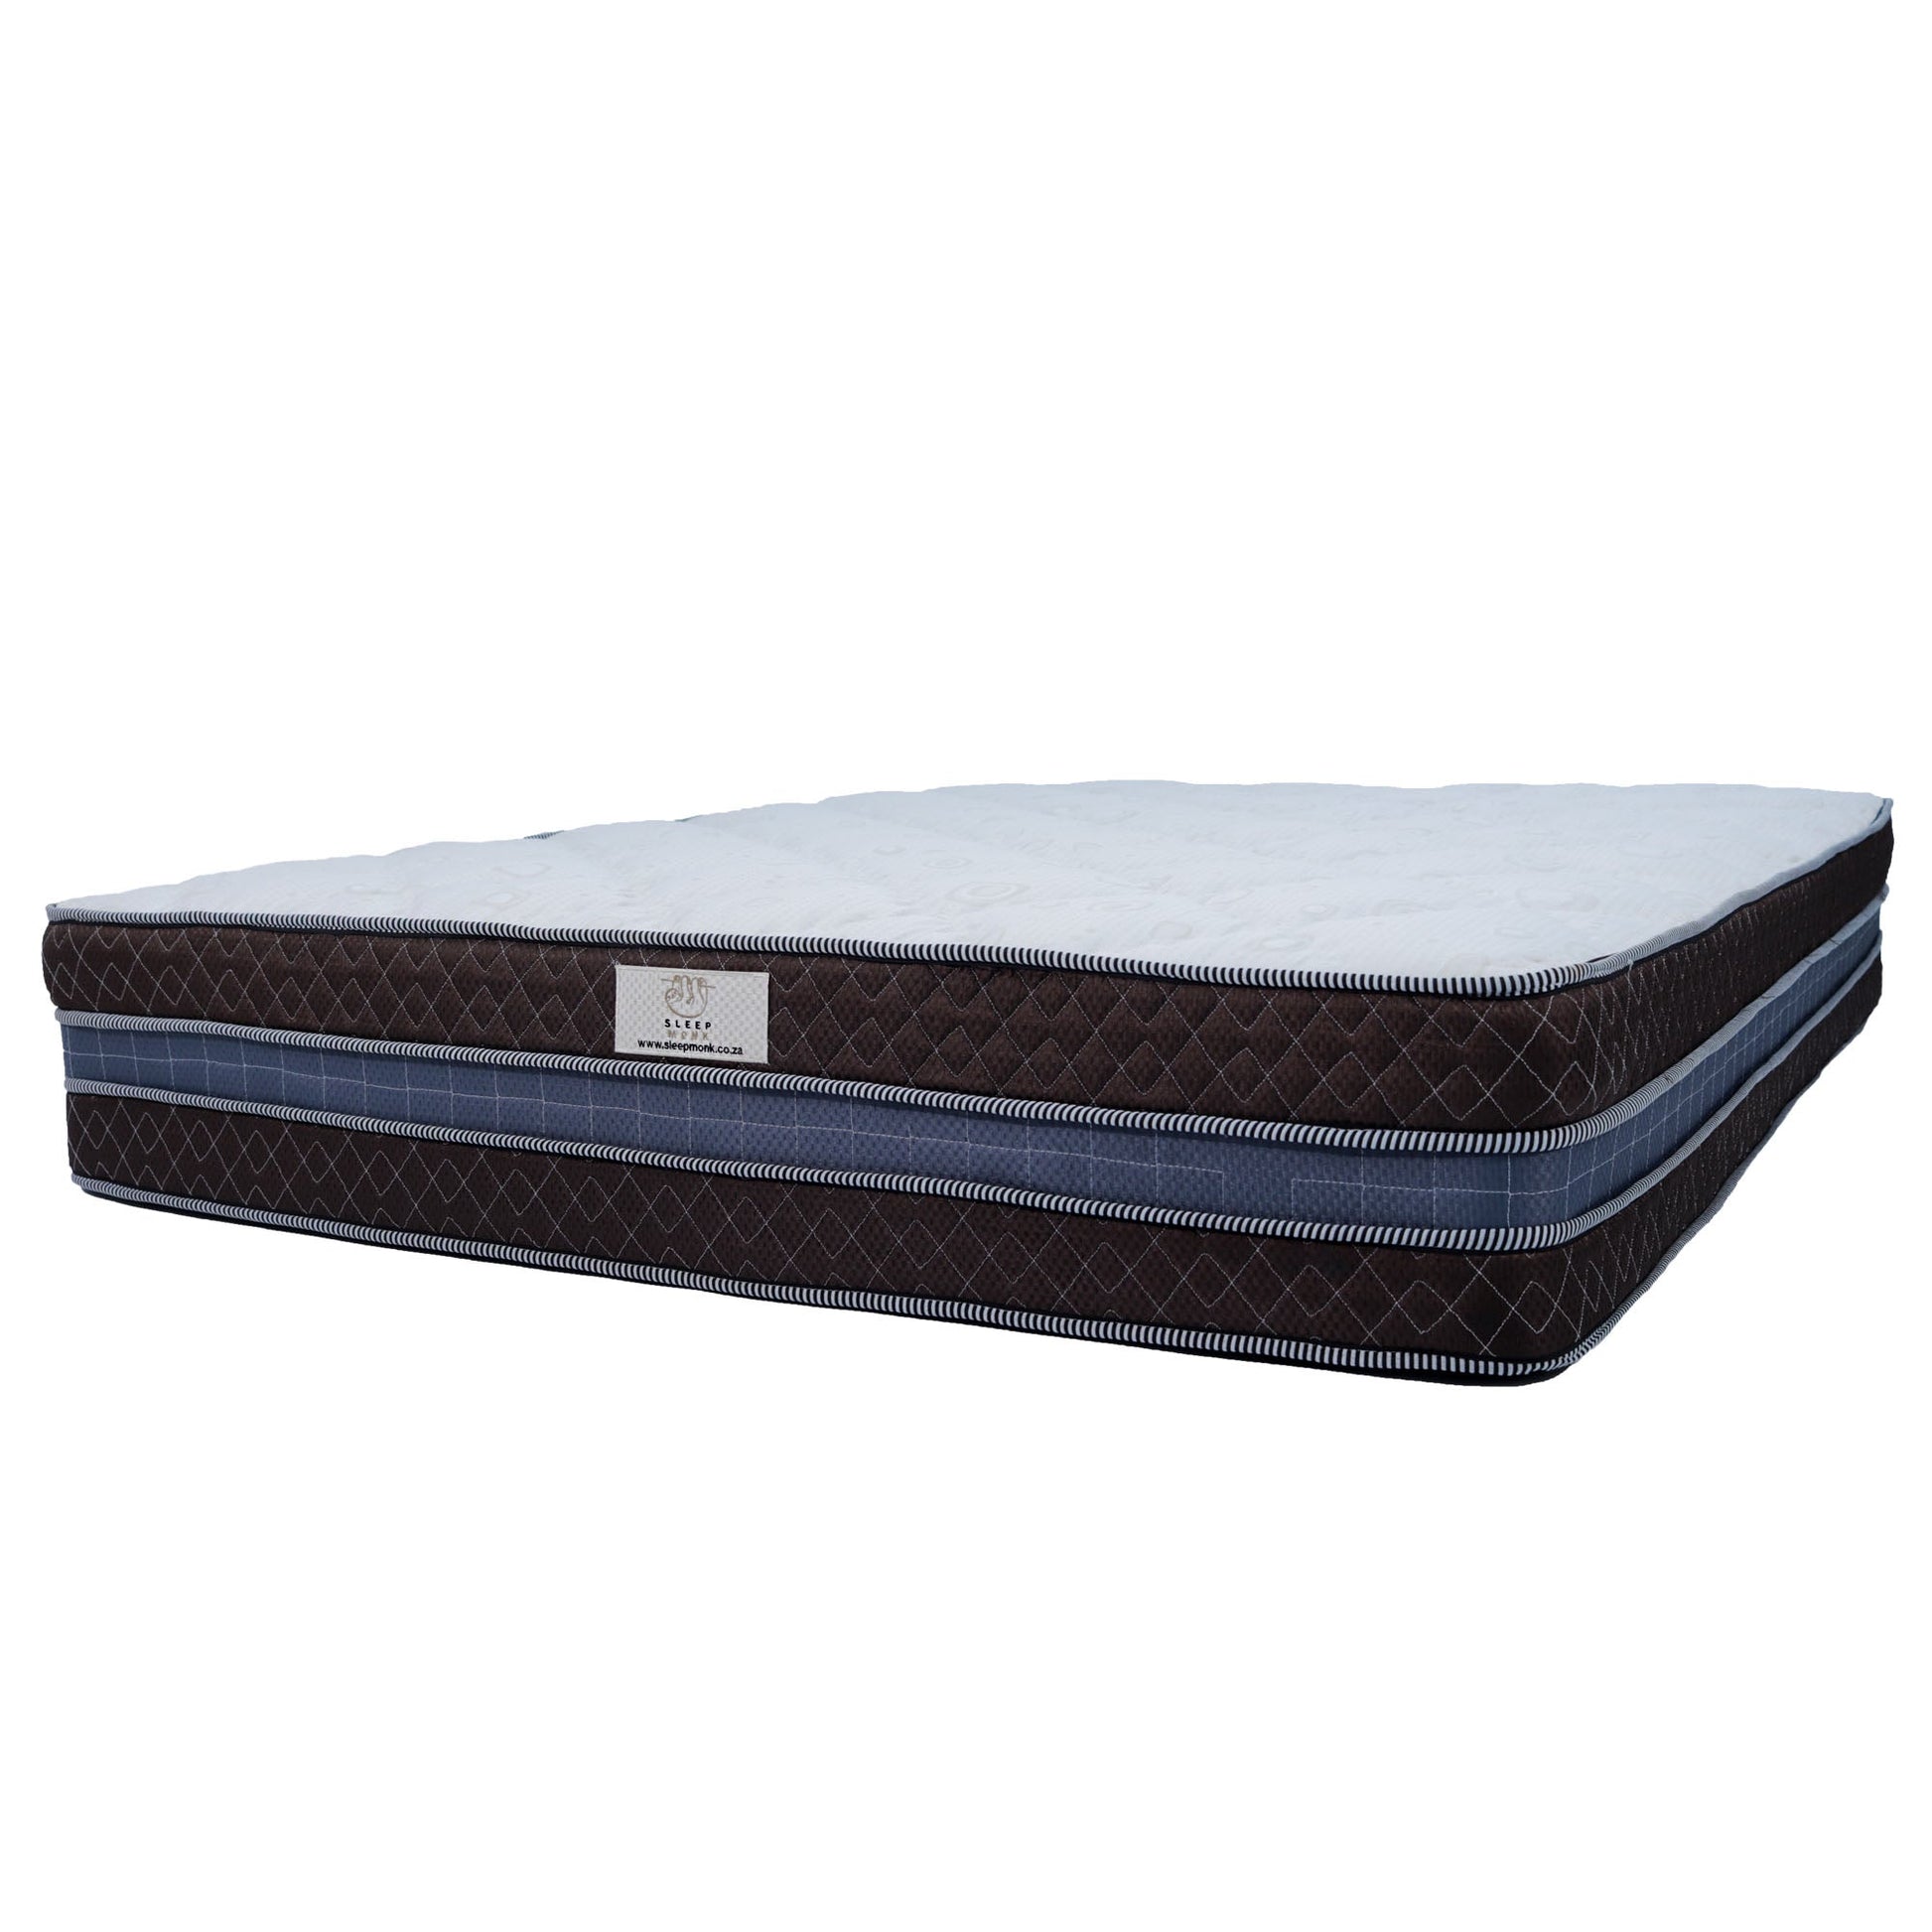 Premium EuroTop Classic Queen Mattress - Premium Bed from SLEEPMONK - Just R 5700! Shop now at SLEEPMONK